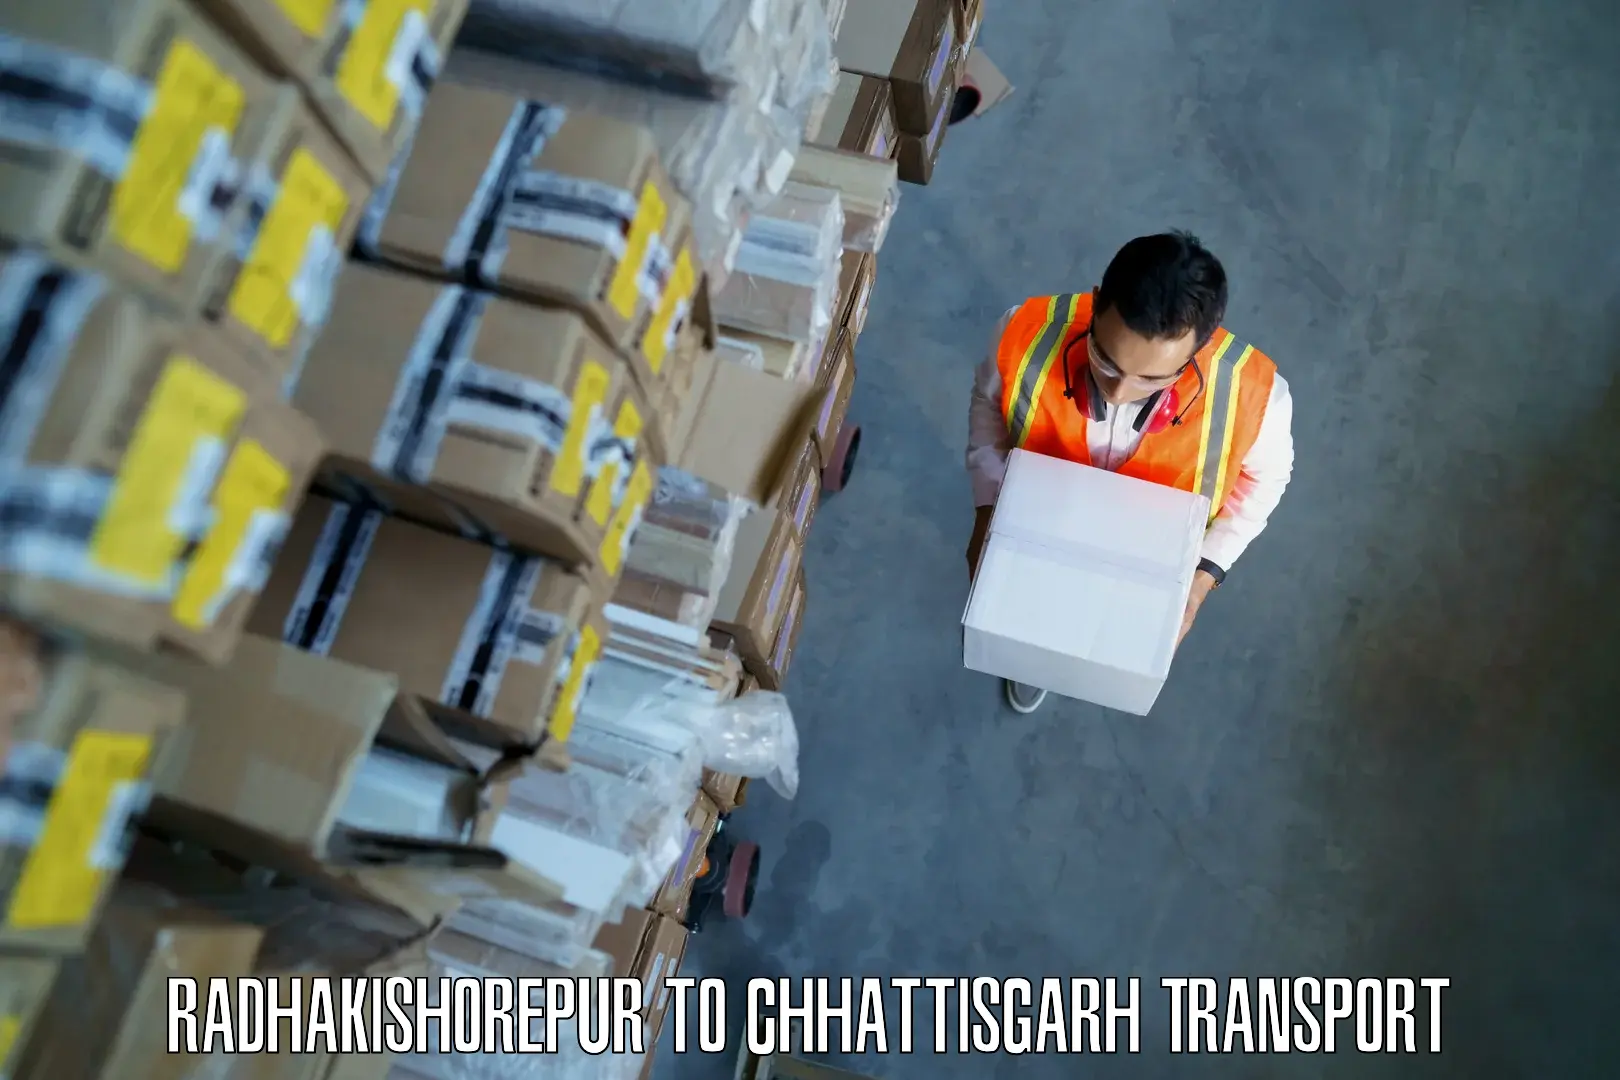 Shipping partner Radhakishorepur to Premnagar